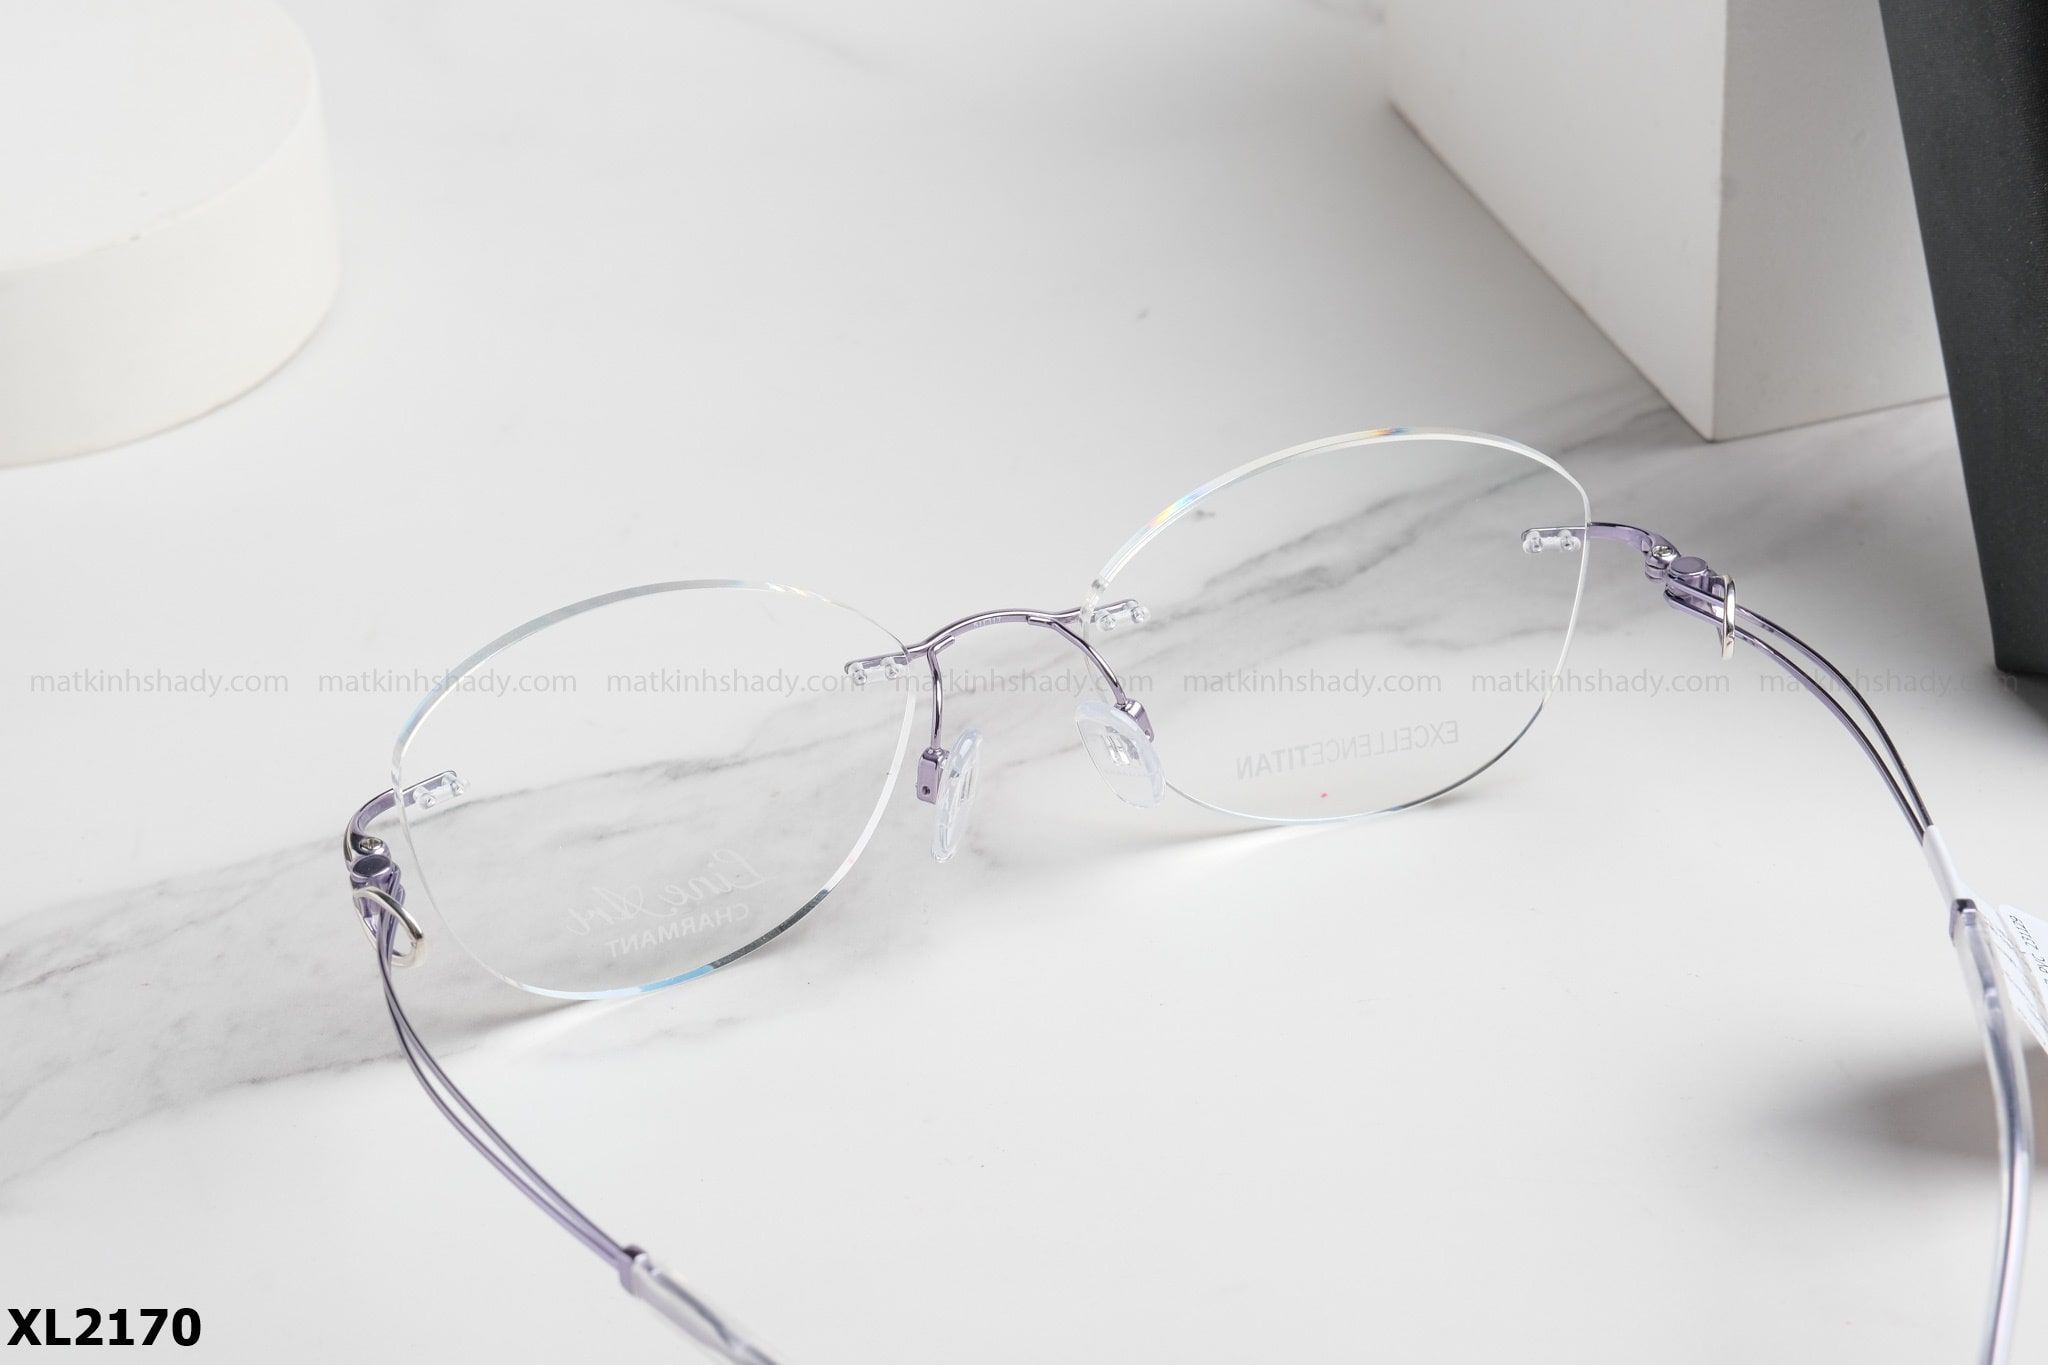  LINE ART CHARMANT Eyewear - Glasses - XL2170 